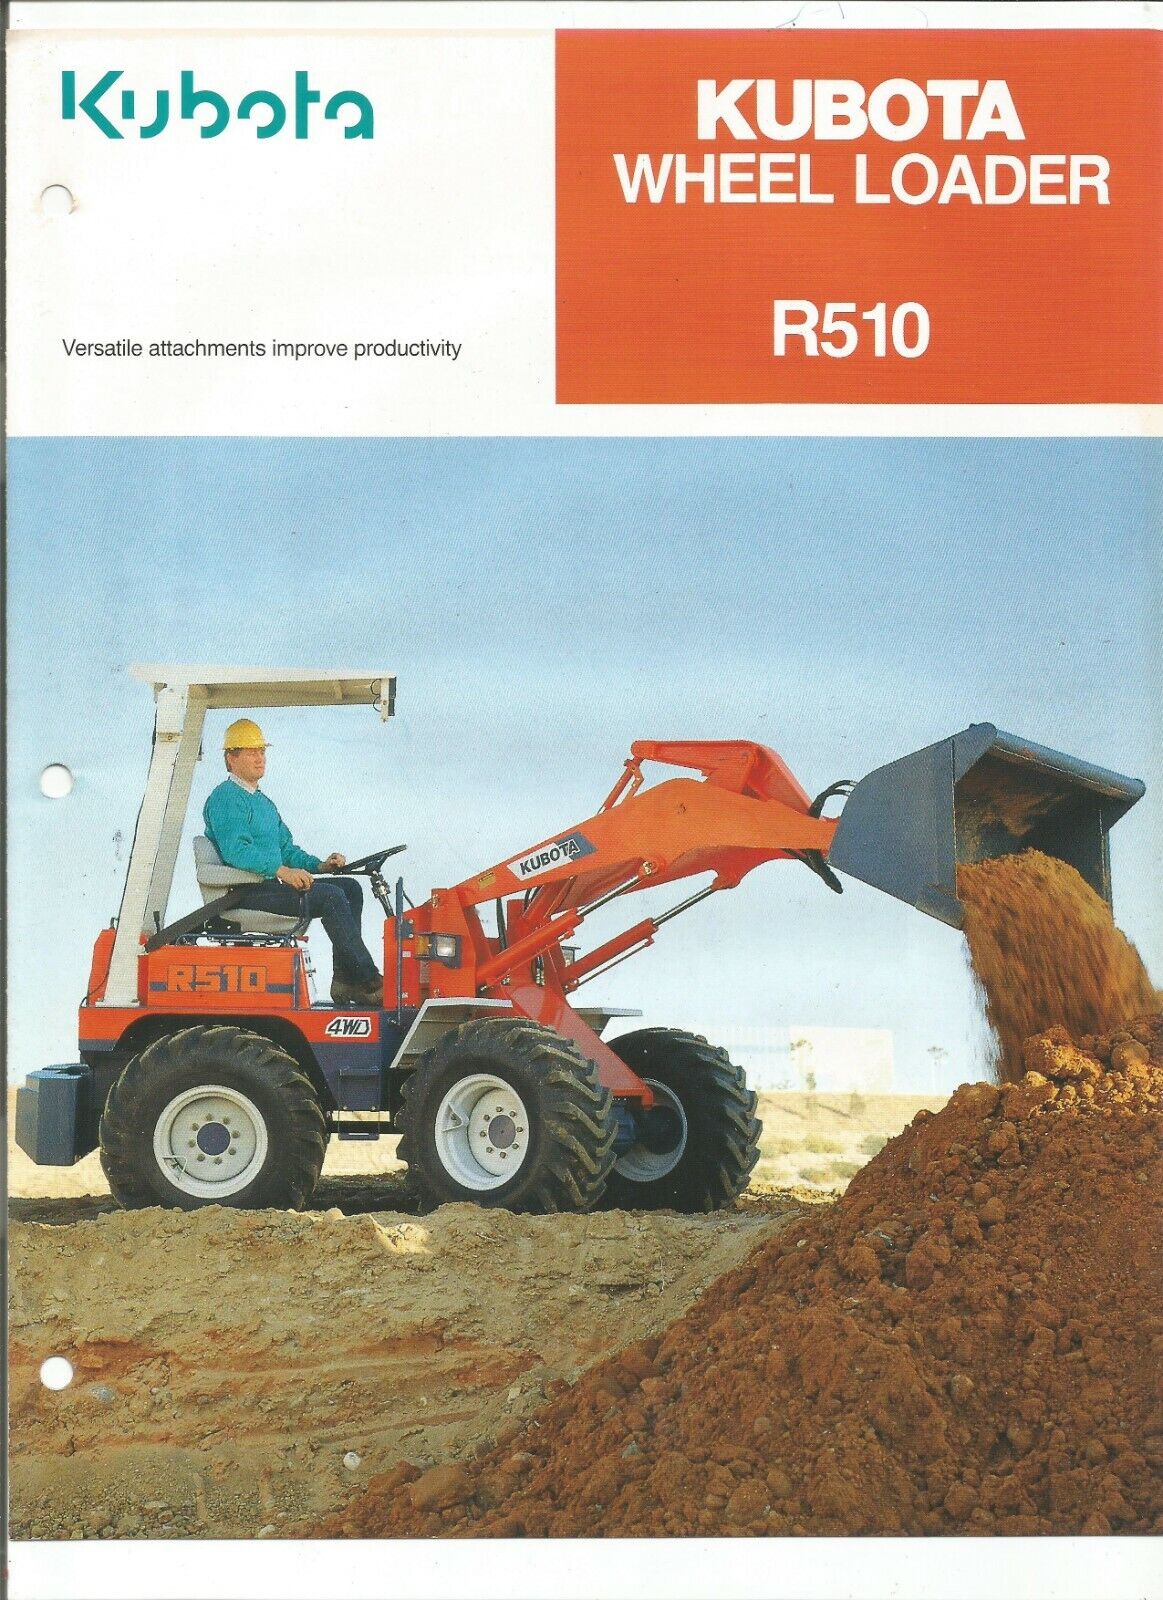 Original Kubota R510 Wheel Loader Sales Brochure Code # 8527-01-US Dated 1990